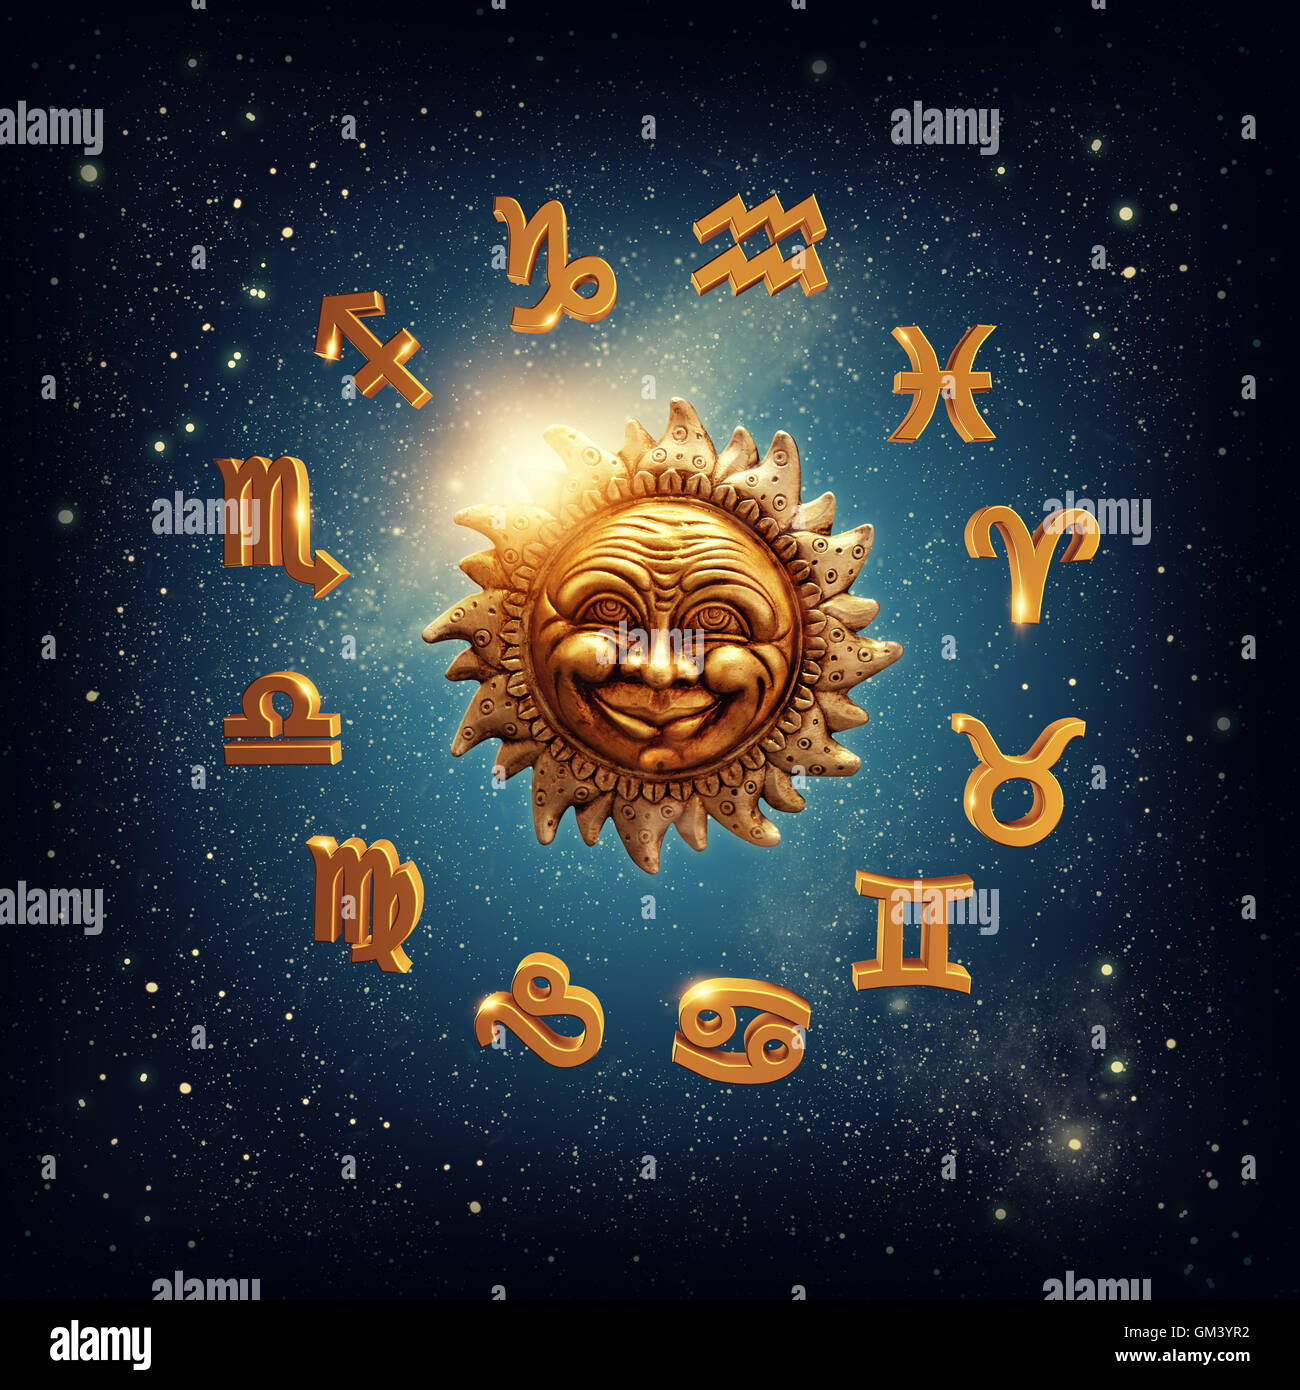 june 10 sun sign cafe astrology